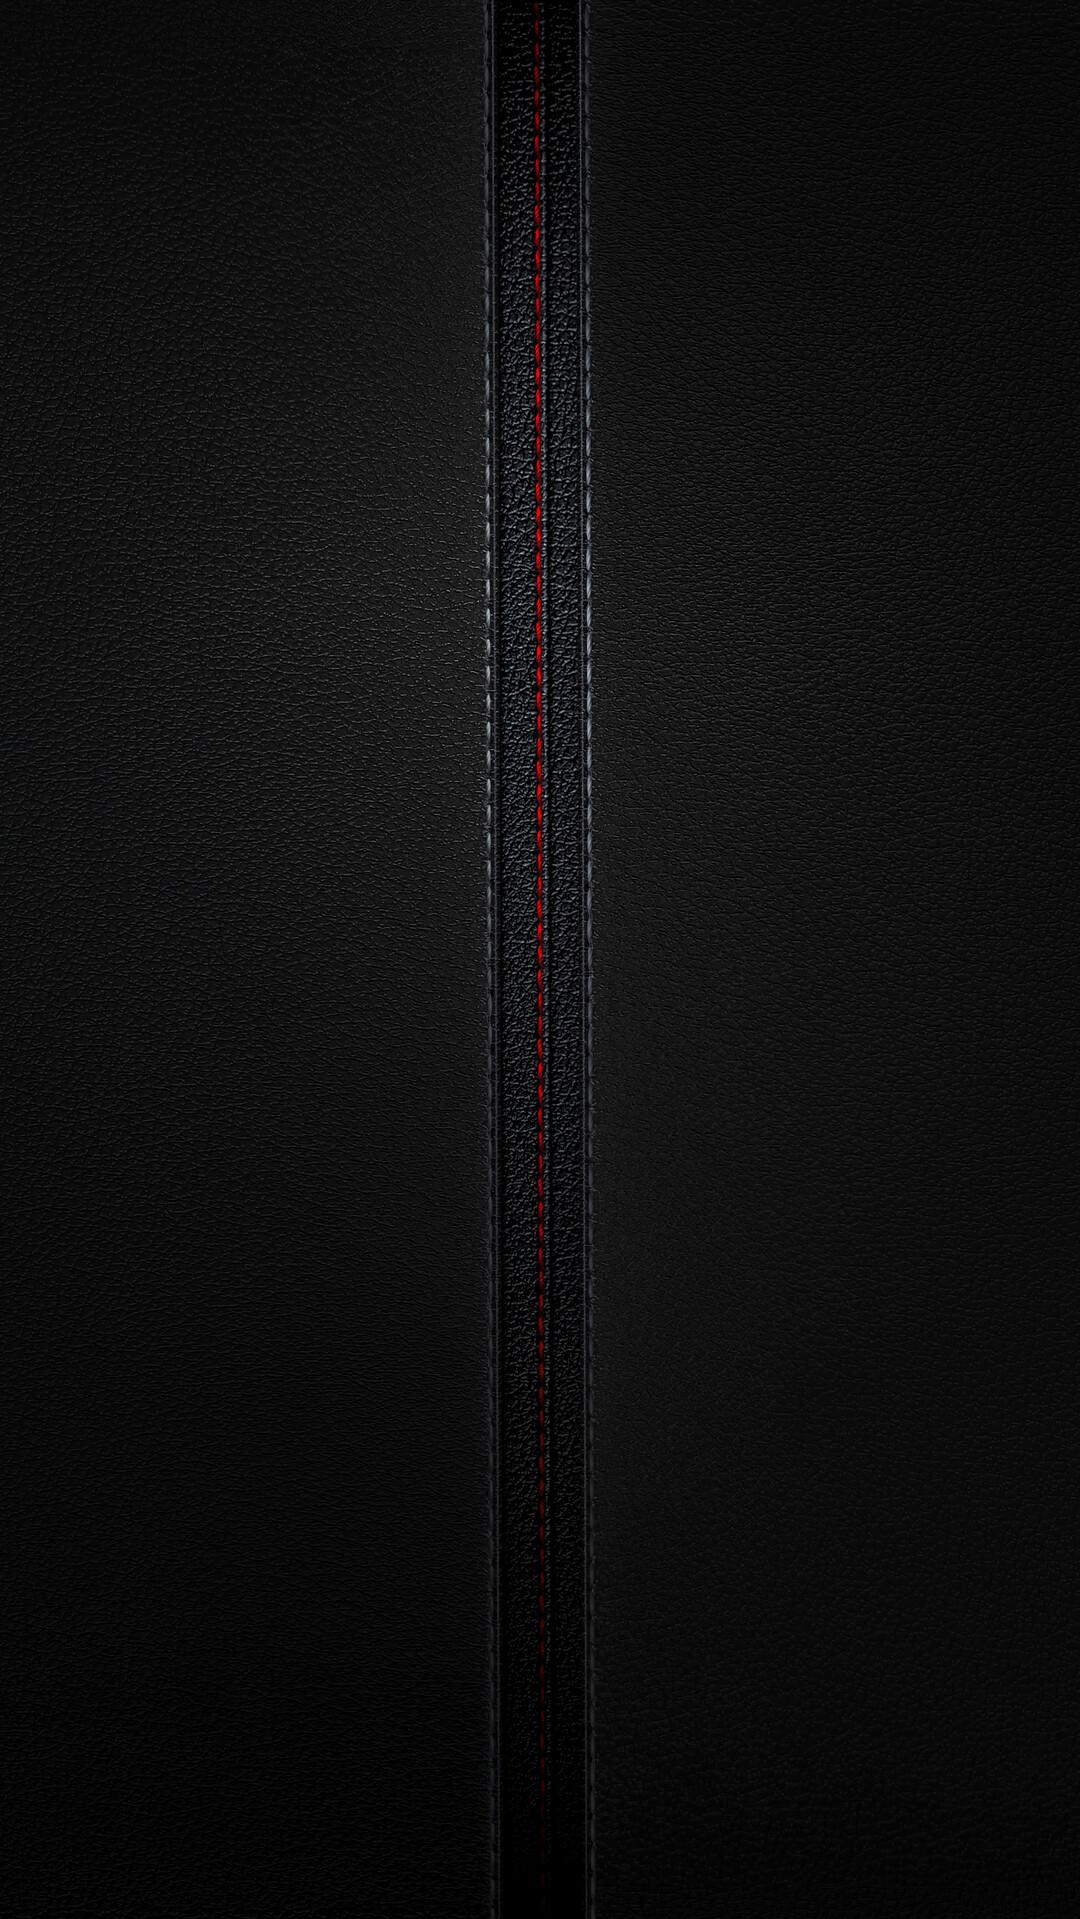 Black Leather Background Huawei Wallpaper 4k HD Pc 2560f